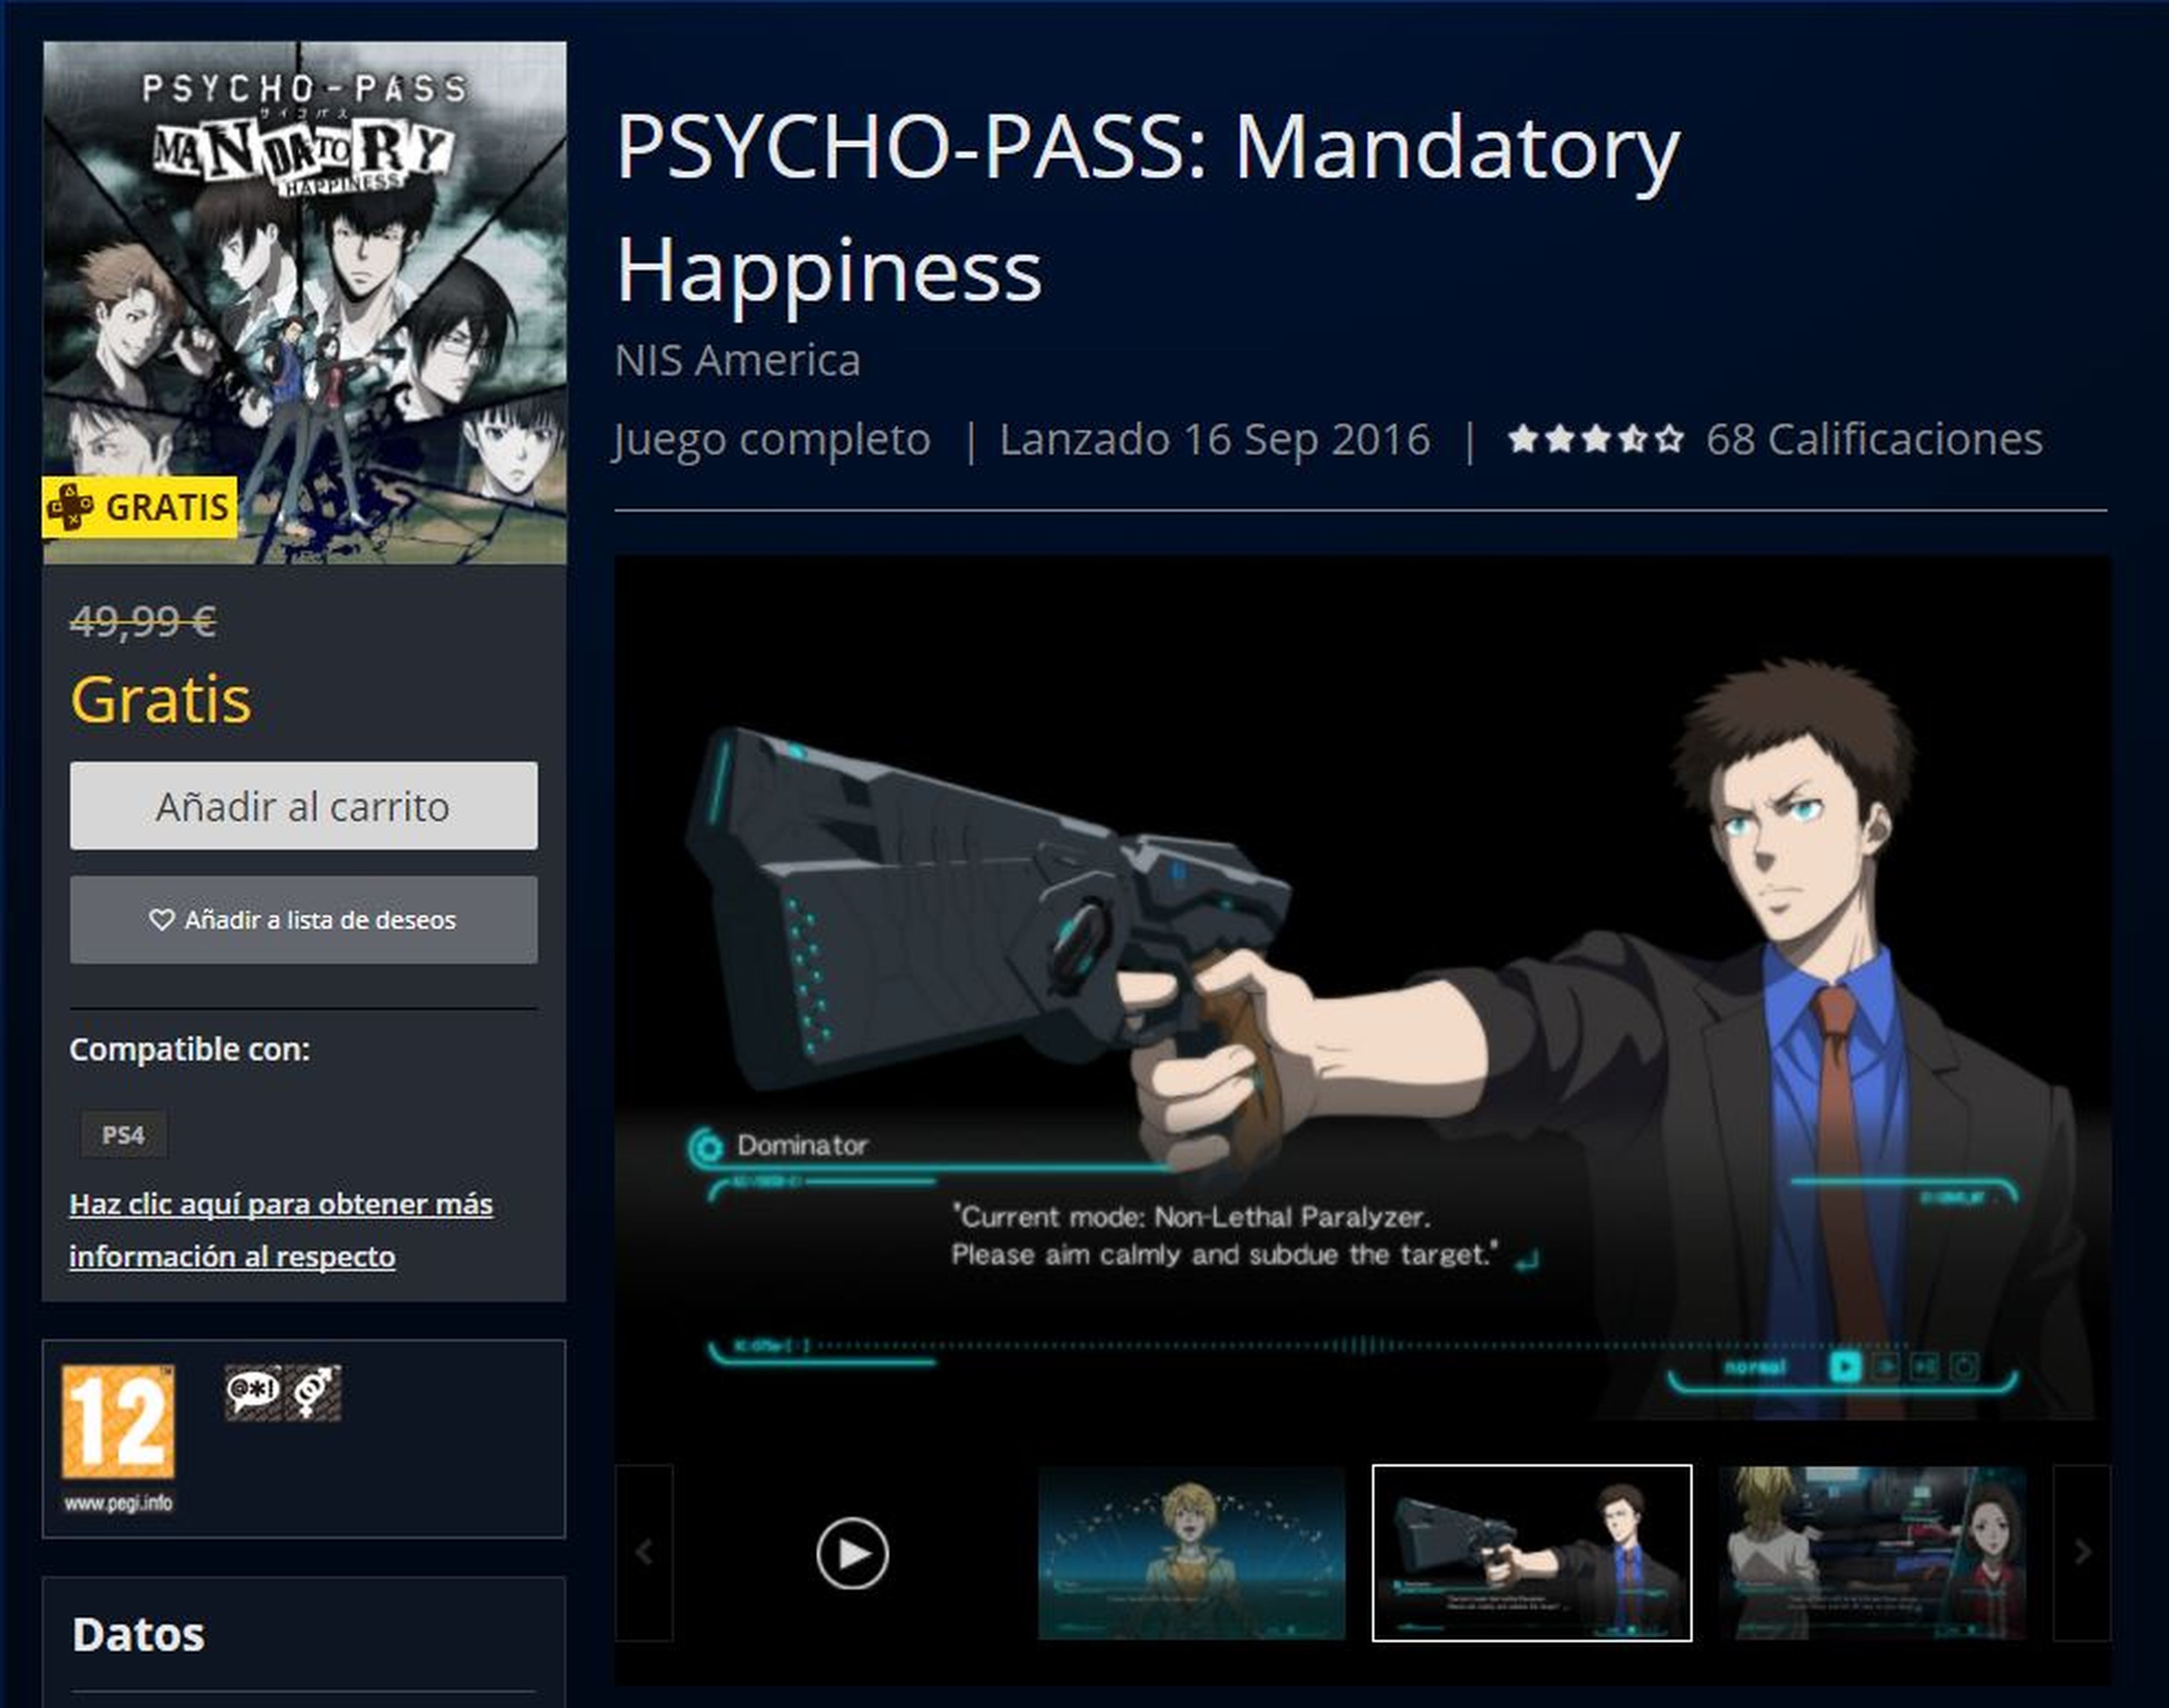 Psycho-Pass Mandatory Happiness gratis con PS Plus